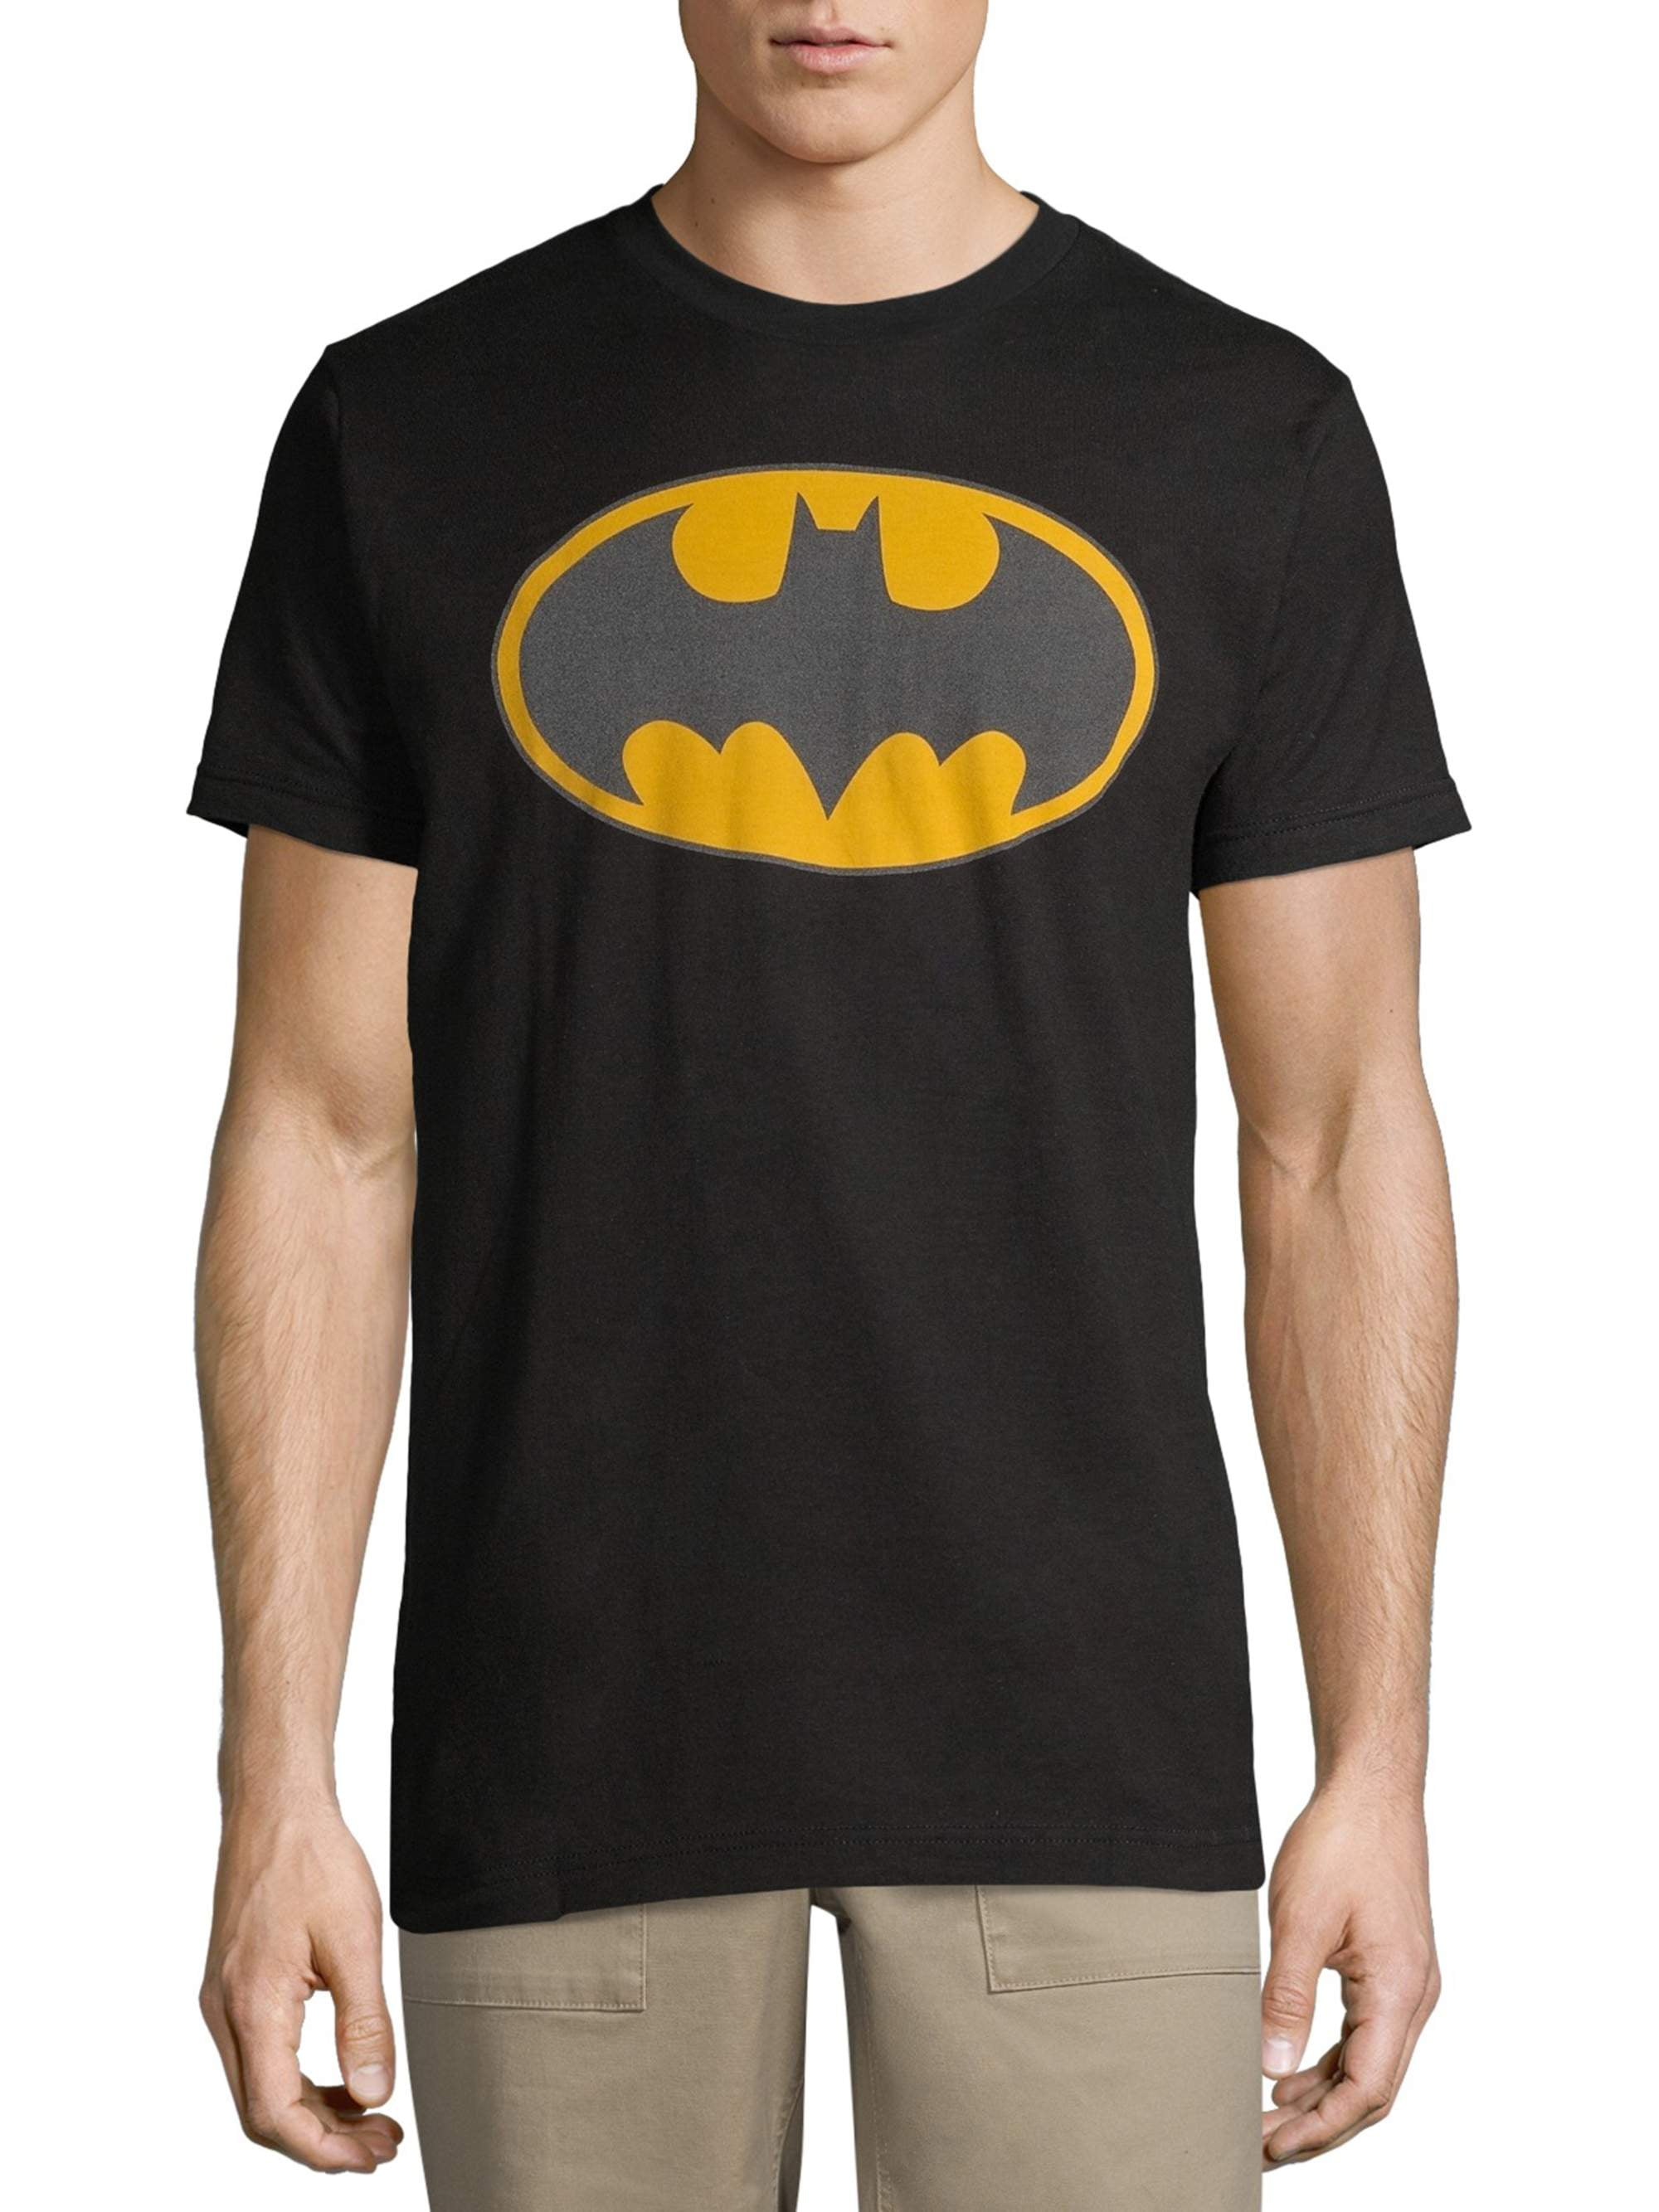 Graphic T-shirt Batman logo 